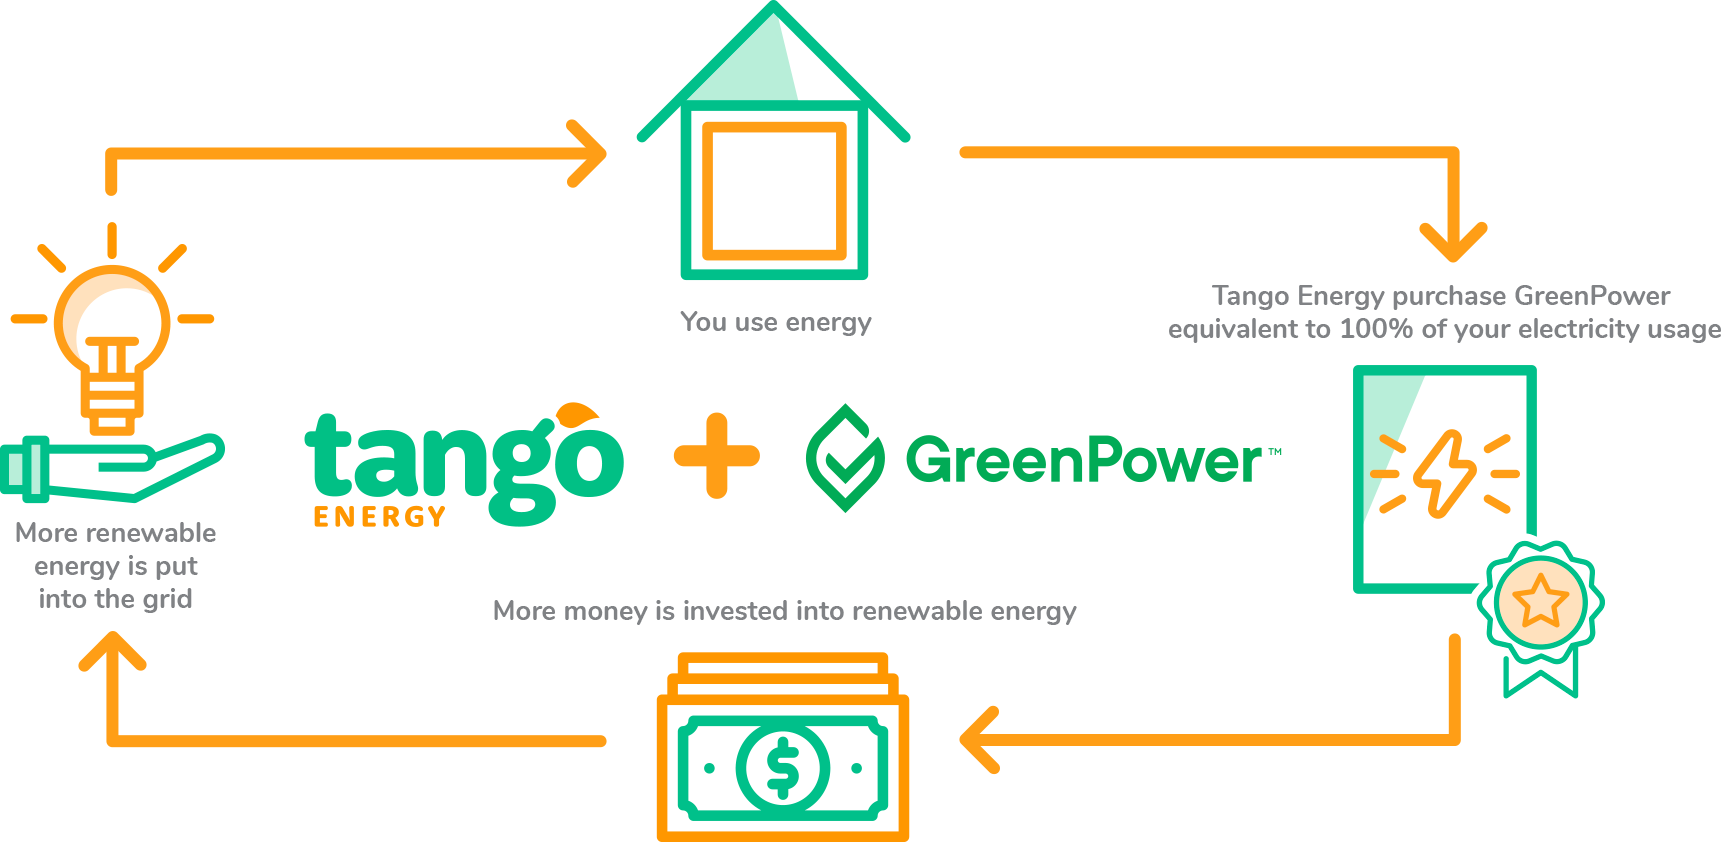 Tango Energy plus GreenPower